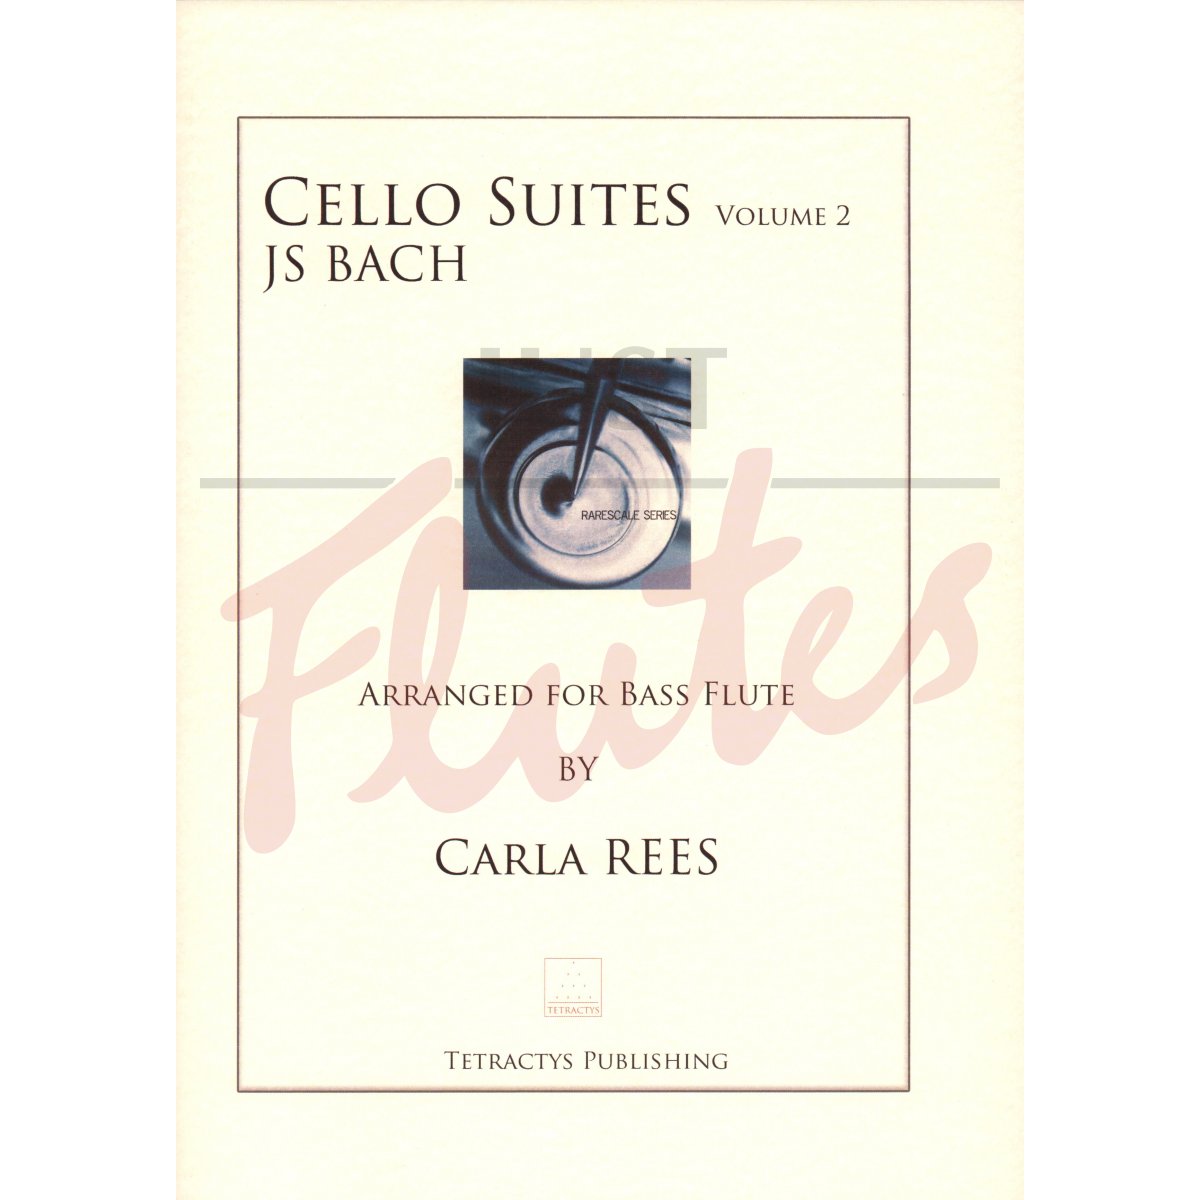 Cello Suites for Bass Flute, Volume 2